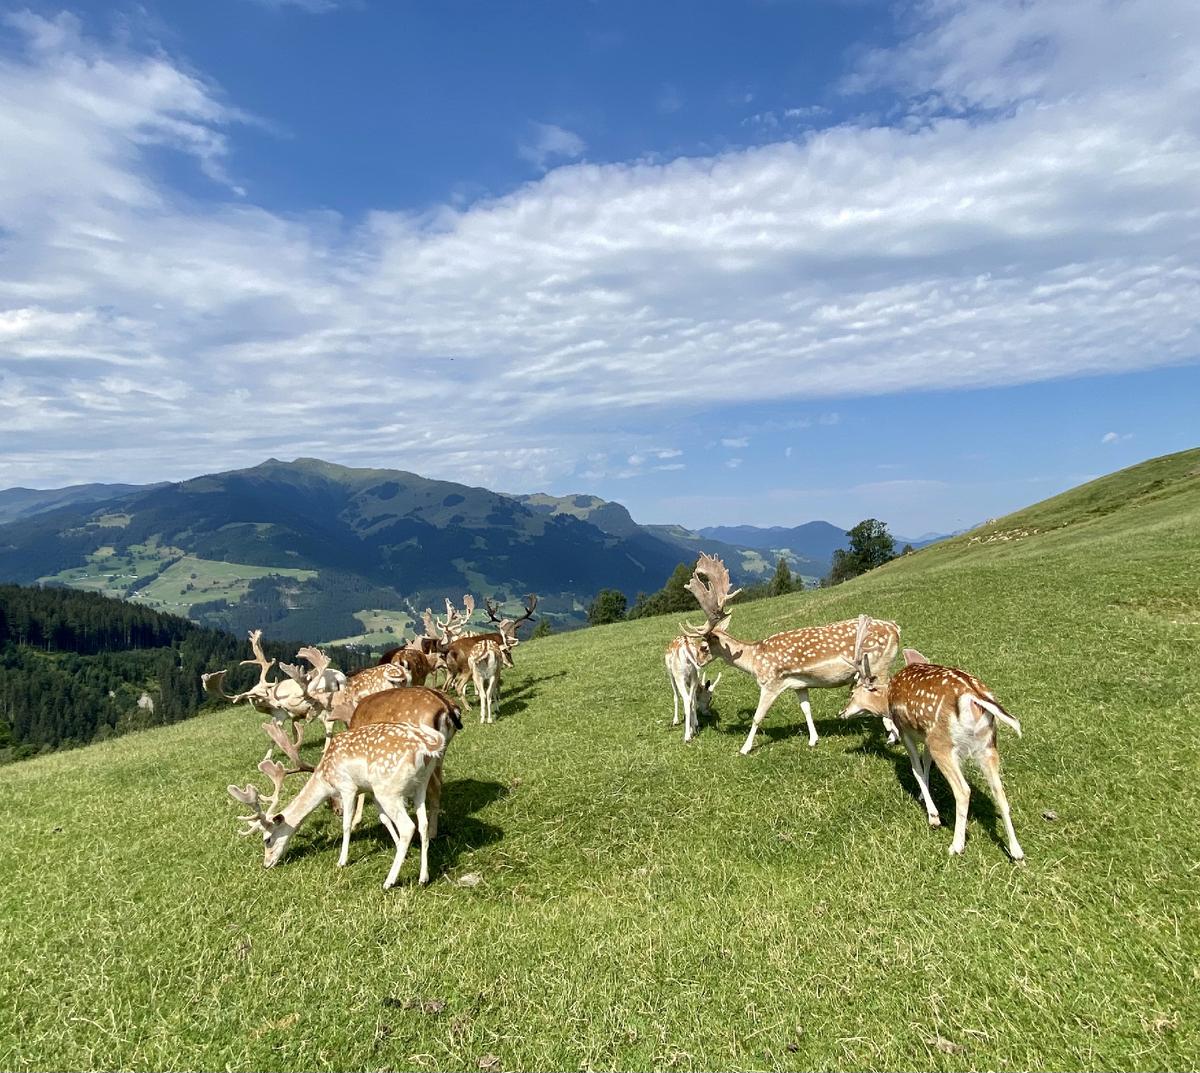 Deer graze at the Wildpark Aurachhe near Kitzbühel in Austria’s Tyrolean Alps. (Margot Black)